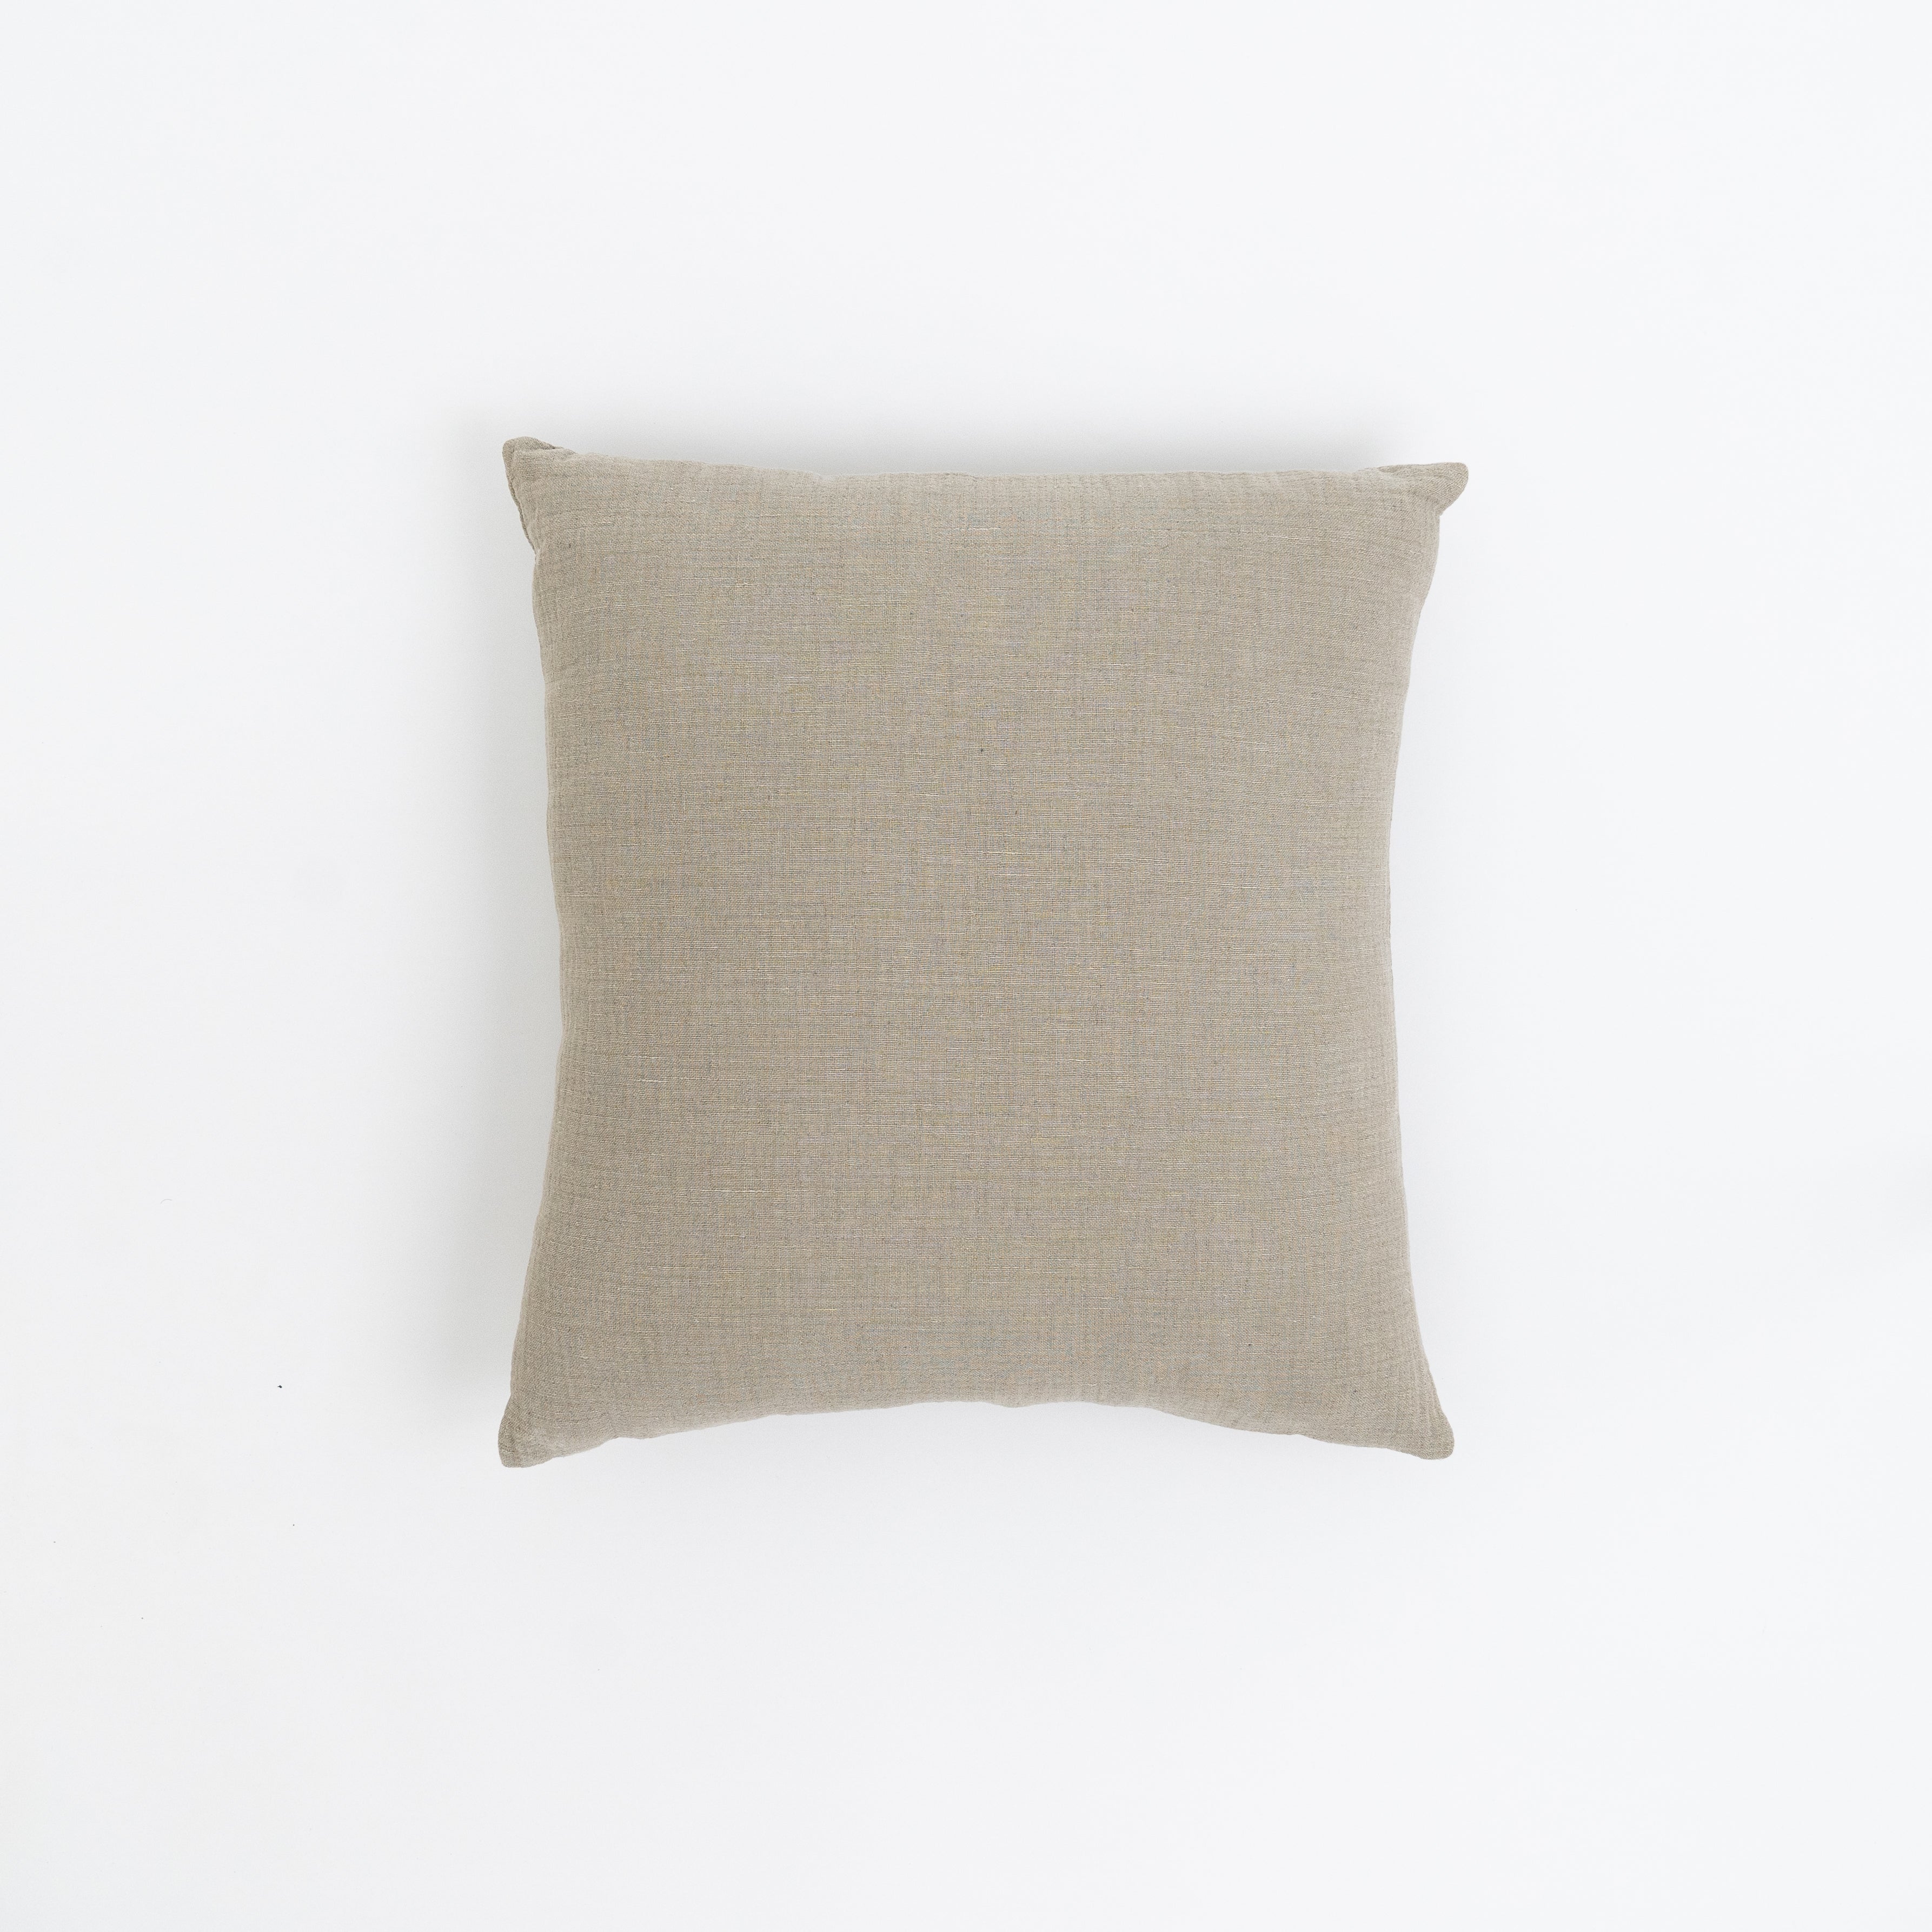 Cushion Cover Sand Beige 45 x45cm ( 8201 #1)  - WS Living - UAE - Cushions Wood and steel Furnitures - Dubai